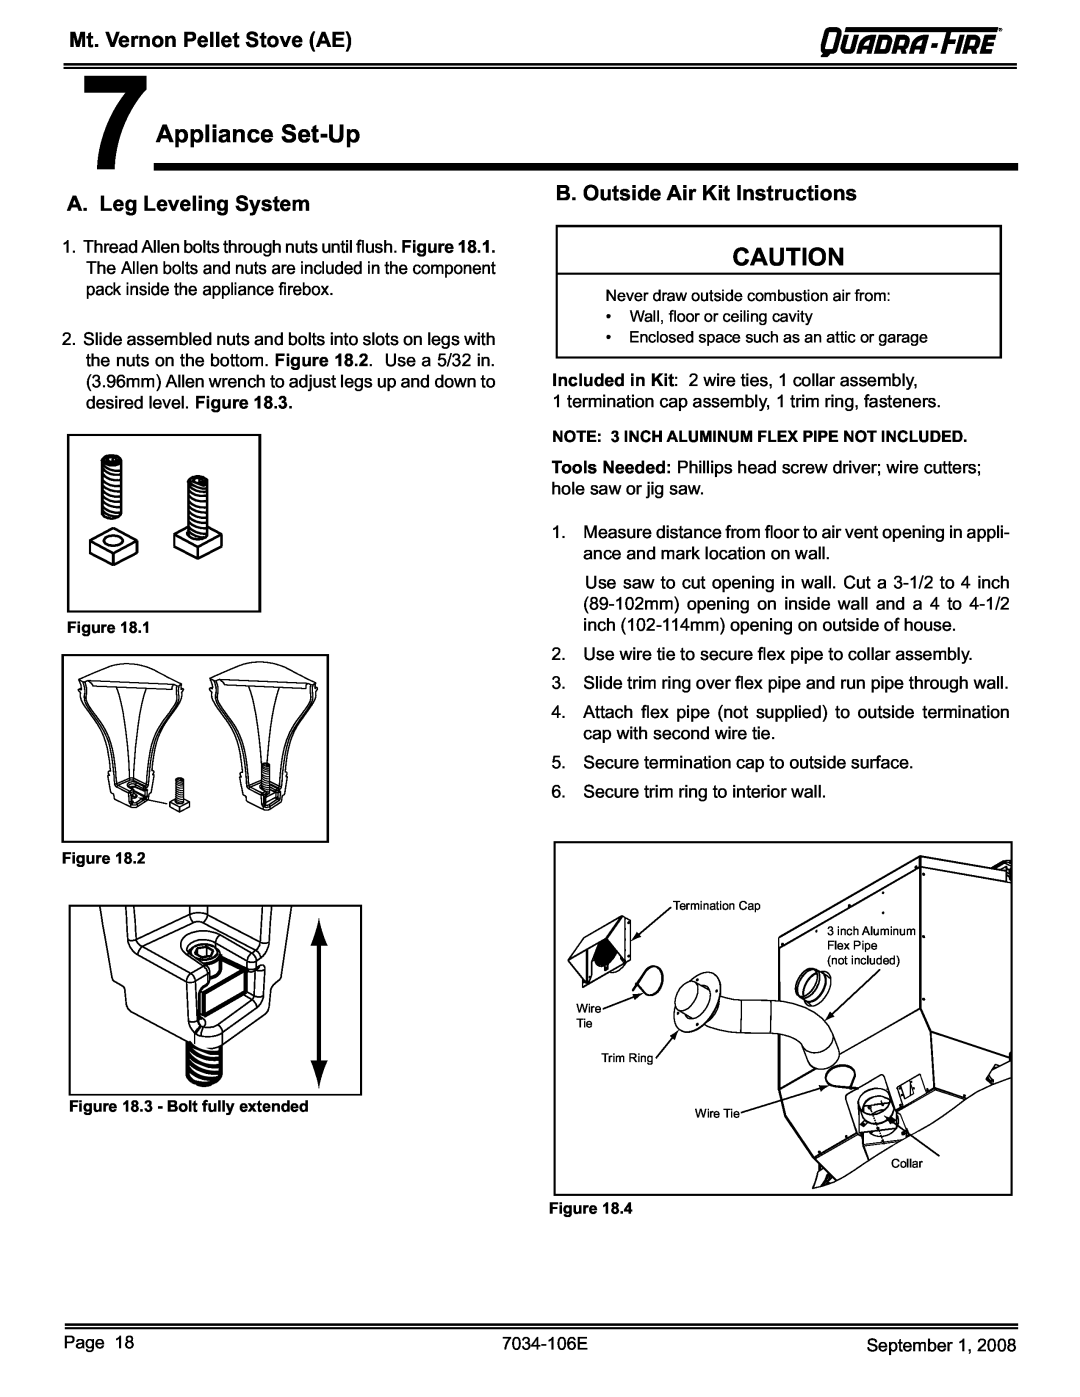 Quadra-Fire MTVERNON-AE-CWL, MTVERNON-AE-PMH 7Appliance Set-Up, A.Leg Leveling System, B. Outside Air Kit Instructions 